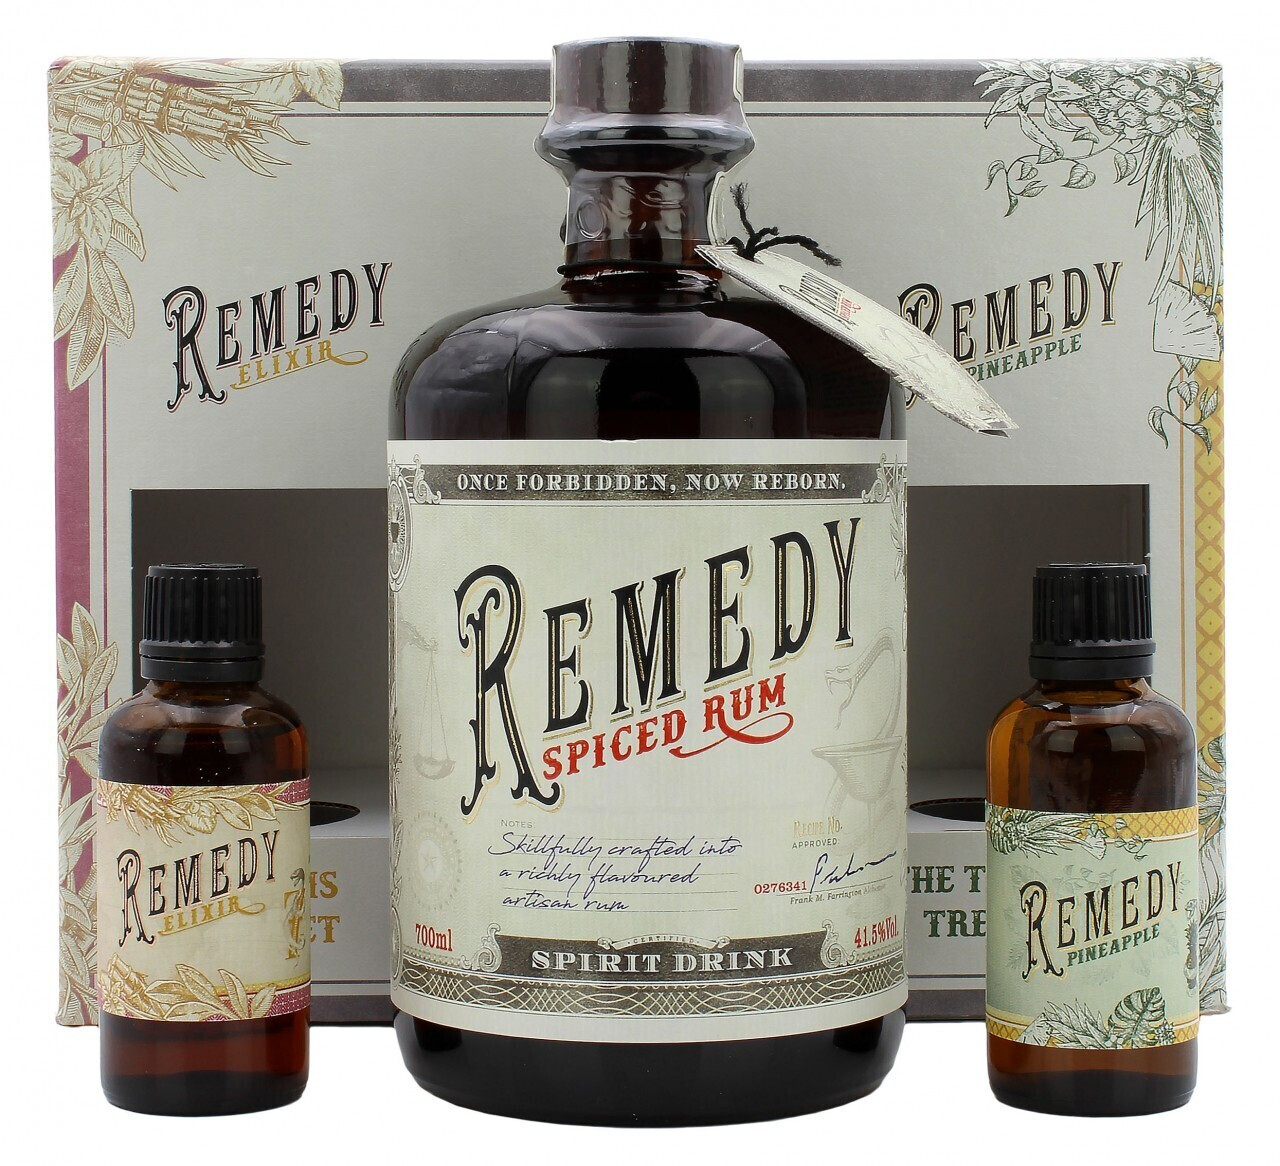 Sierra Madre Remedy Spiced Rum 41,5% 0,7l + Pineapple Minis 0,1l ab 21,60 €  | Preisvergleich bei